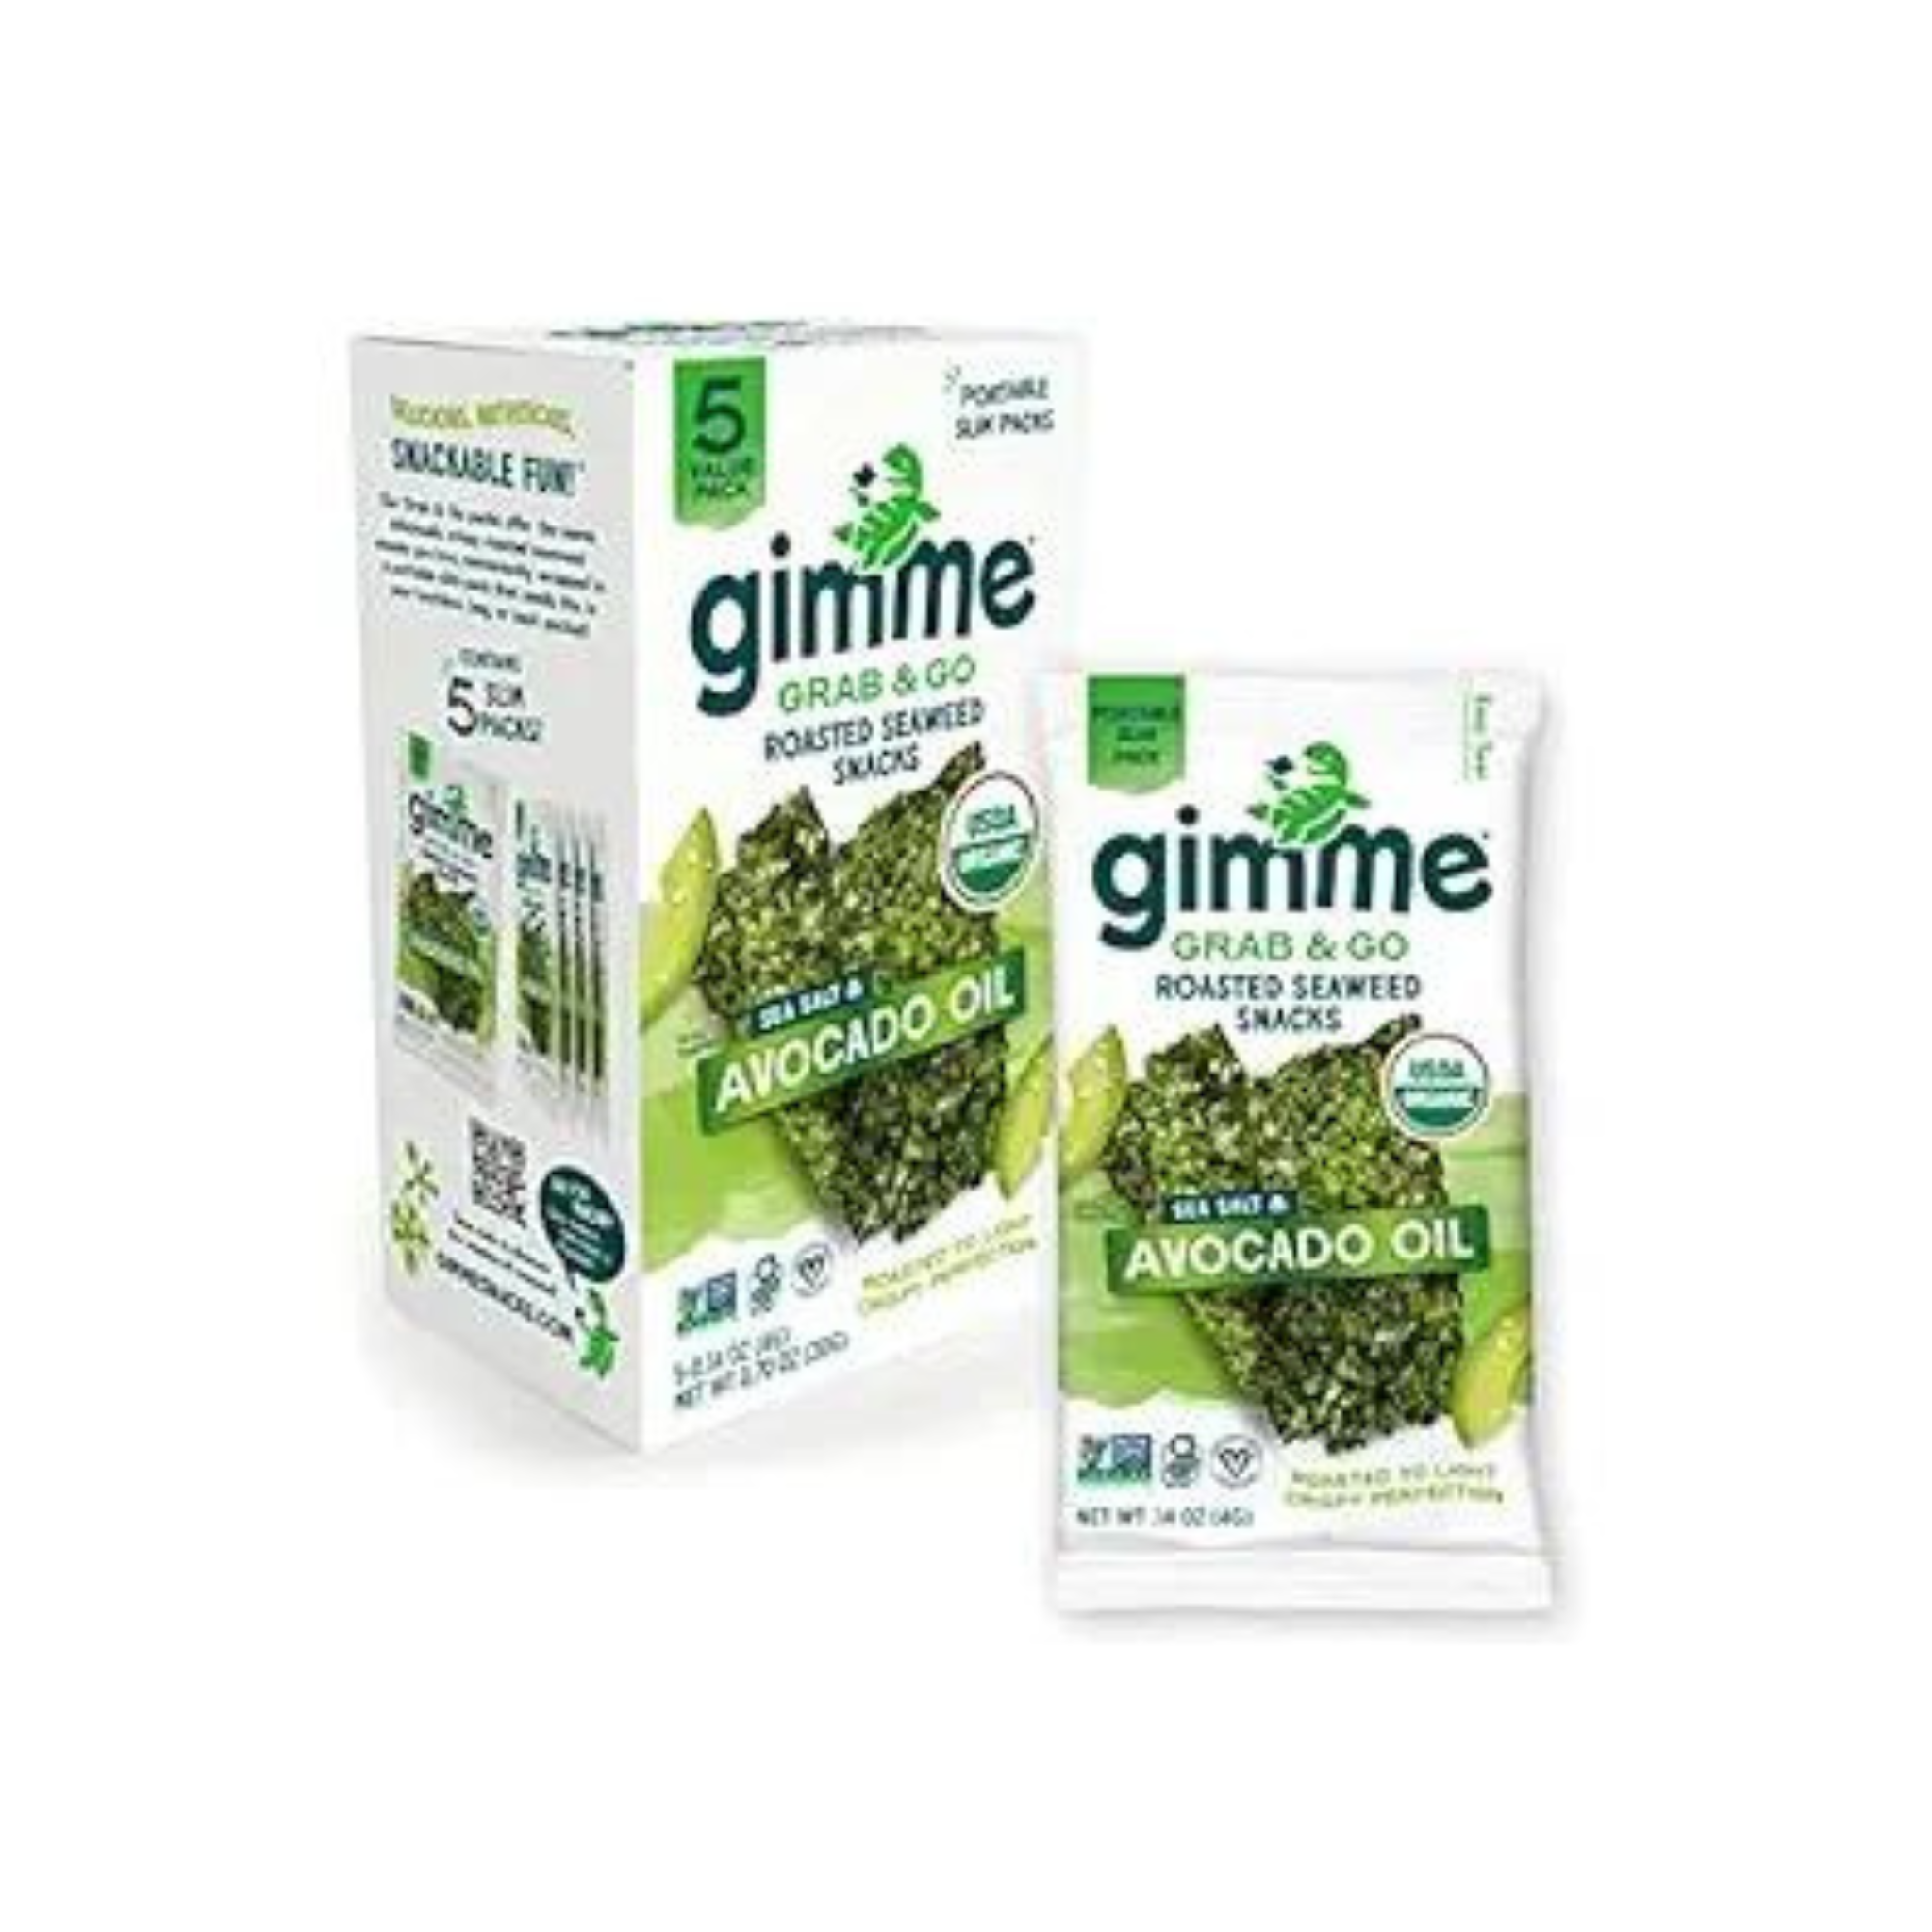 5-Pack 0.14oz gimMe Grab & Go Roasted Seaweed Sheets (Sea Salt & Avocado Oil)